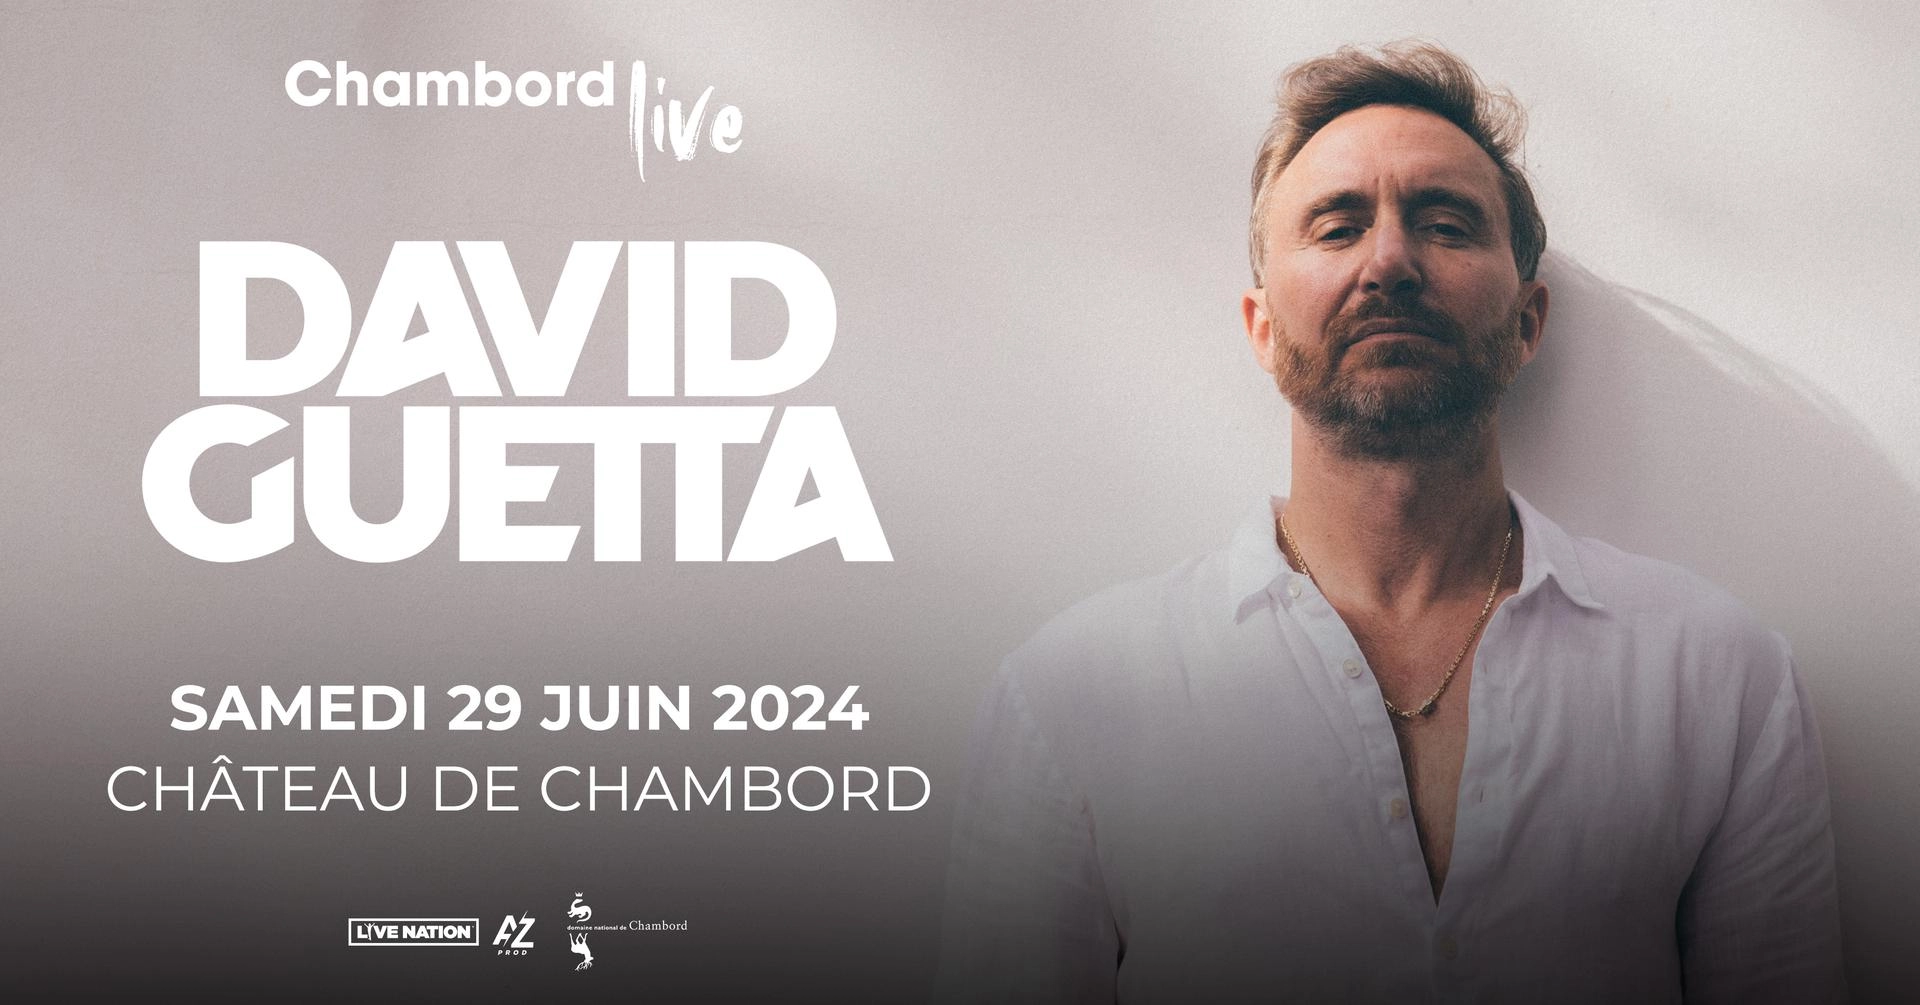 David Guetta - Chambord Live 2024 en Chateau de Chambord Tickets